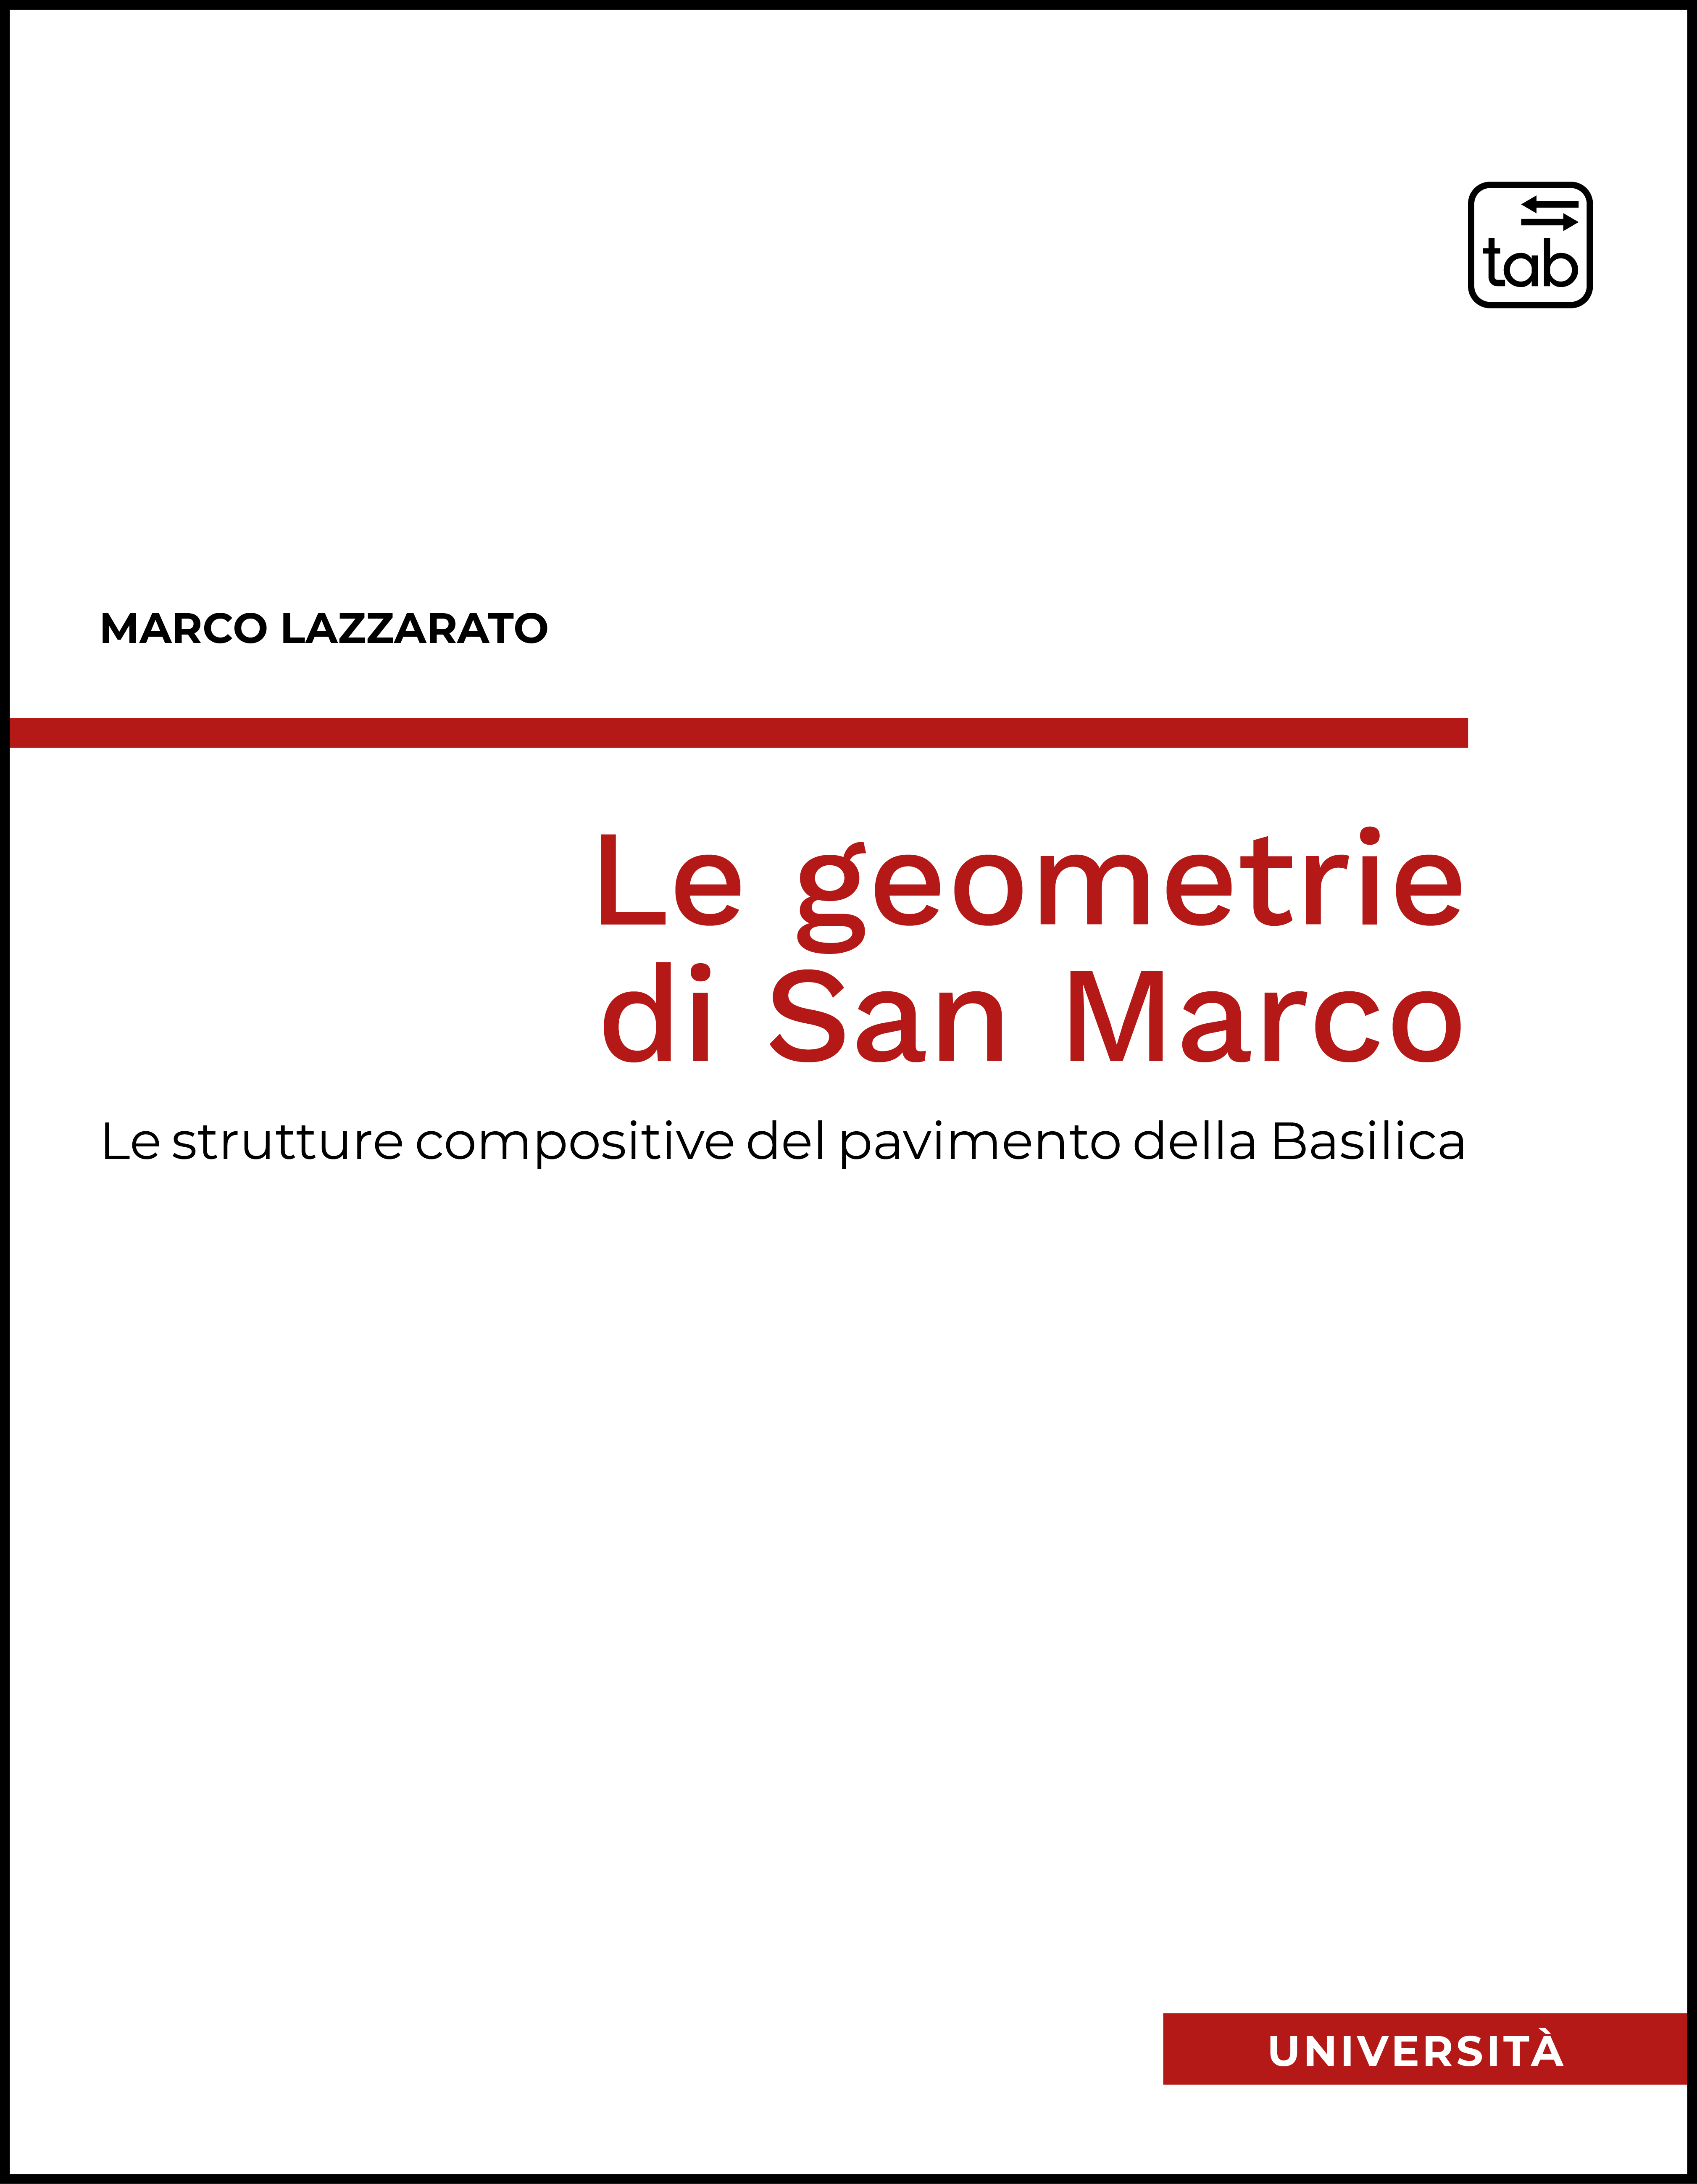 Le geometrie di San Marco